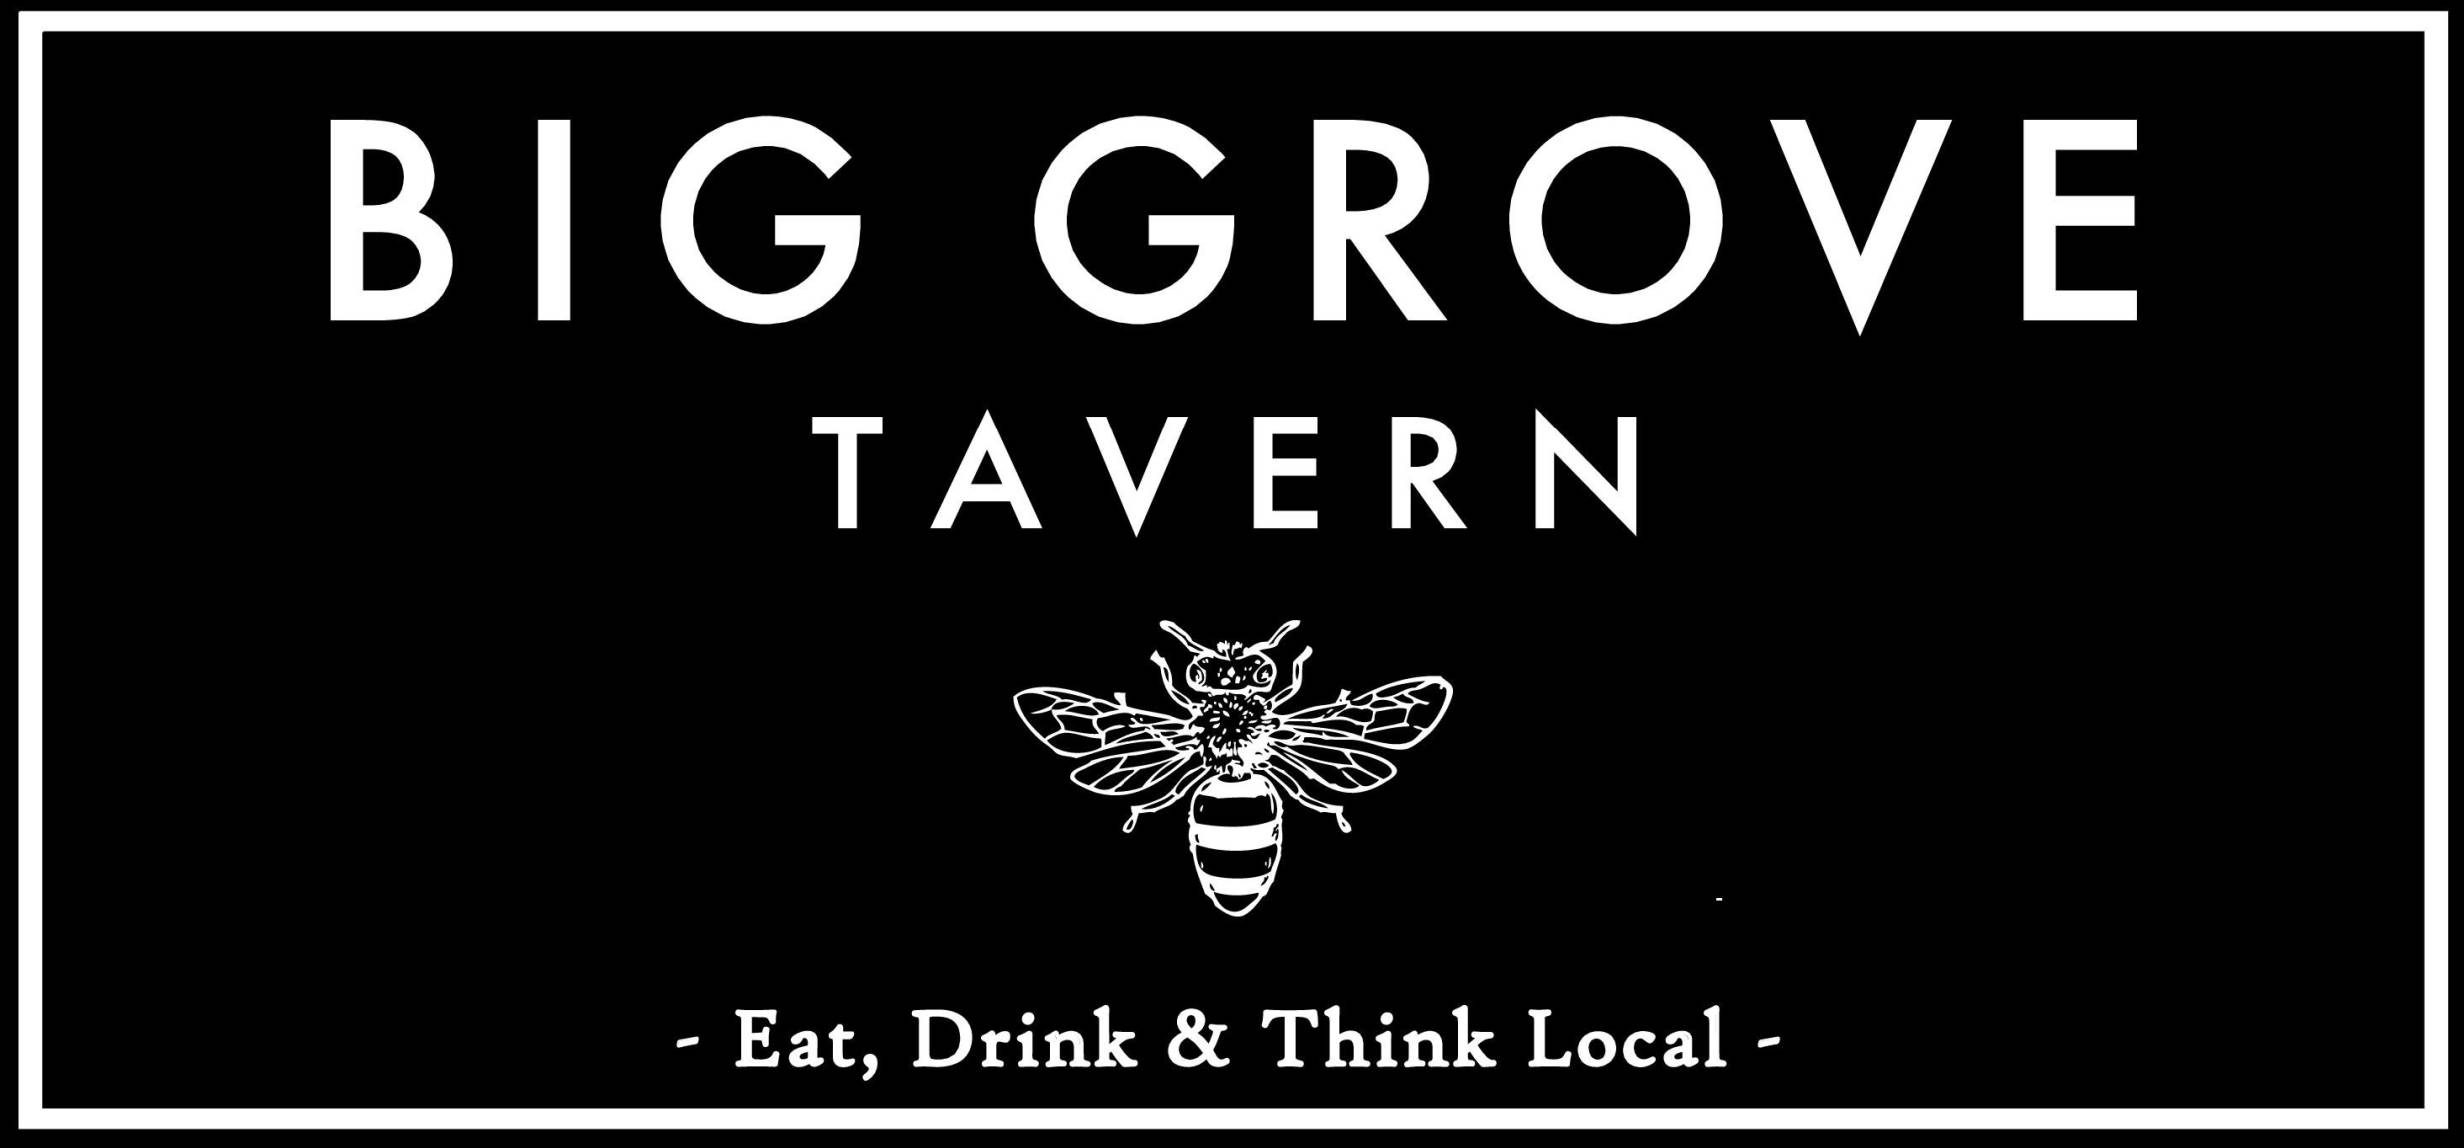 Big Grove Tavern updates its menu for Winter